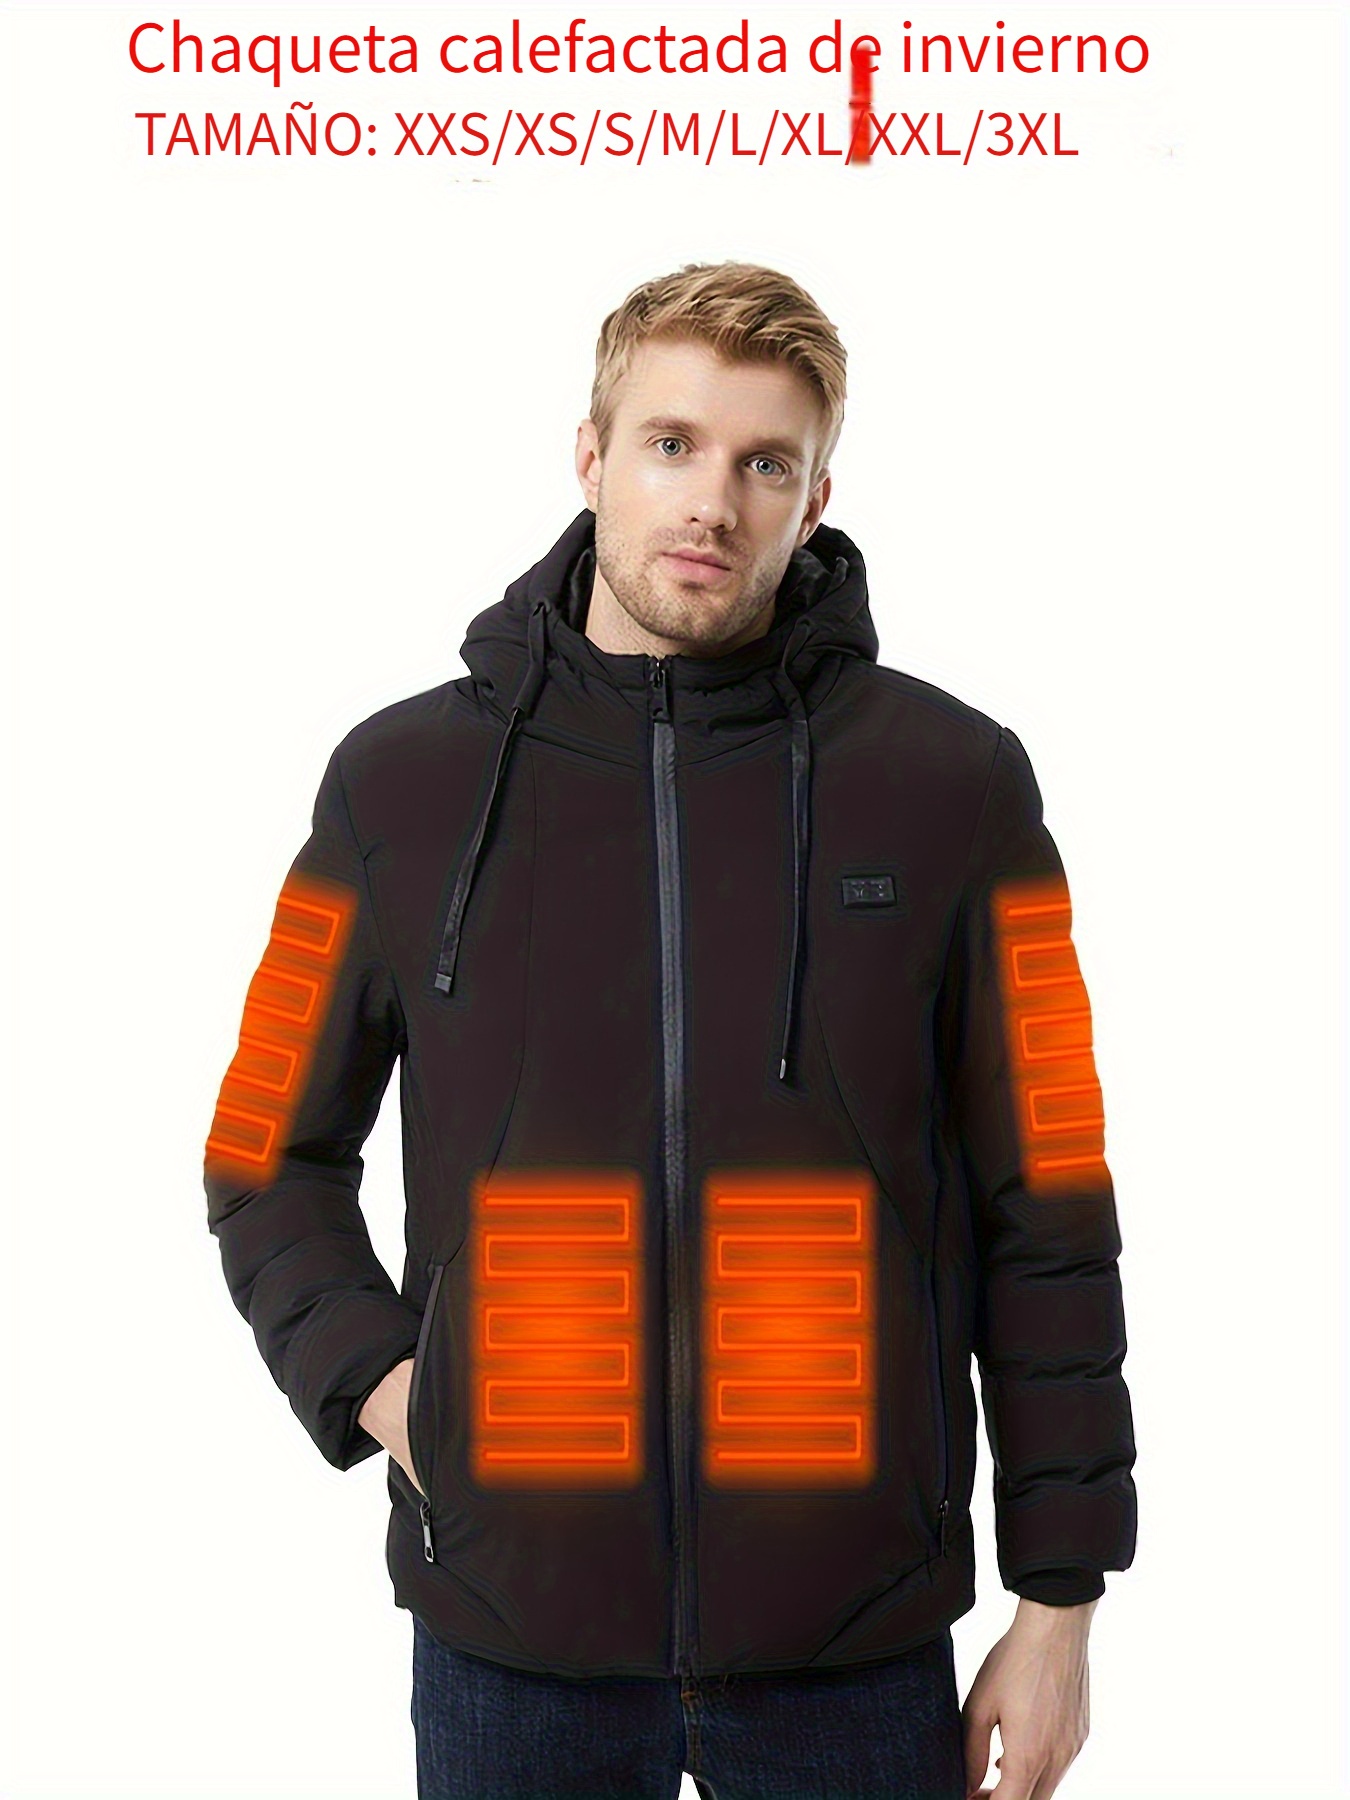 Chaleco calefactable de invierno, chaqueta eléctrica USB abrigo calefactor  M-3XL